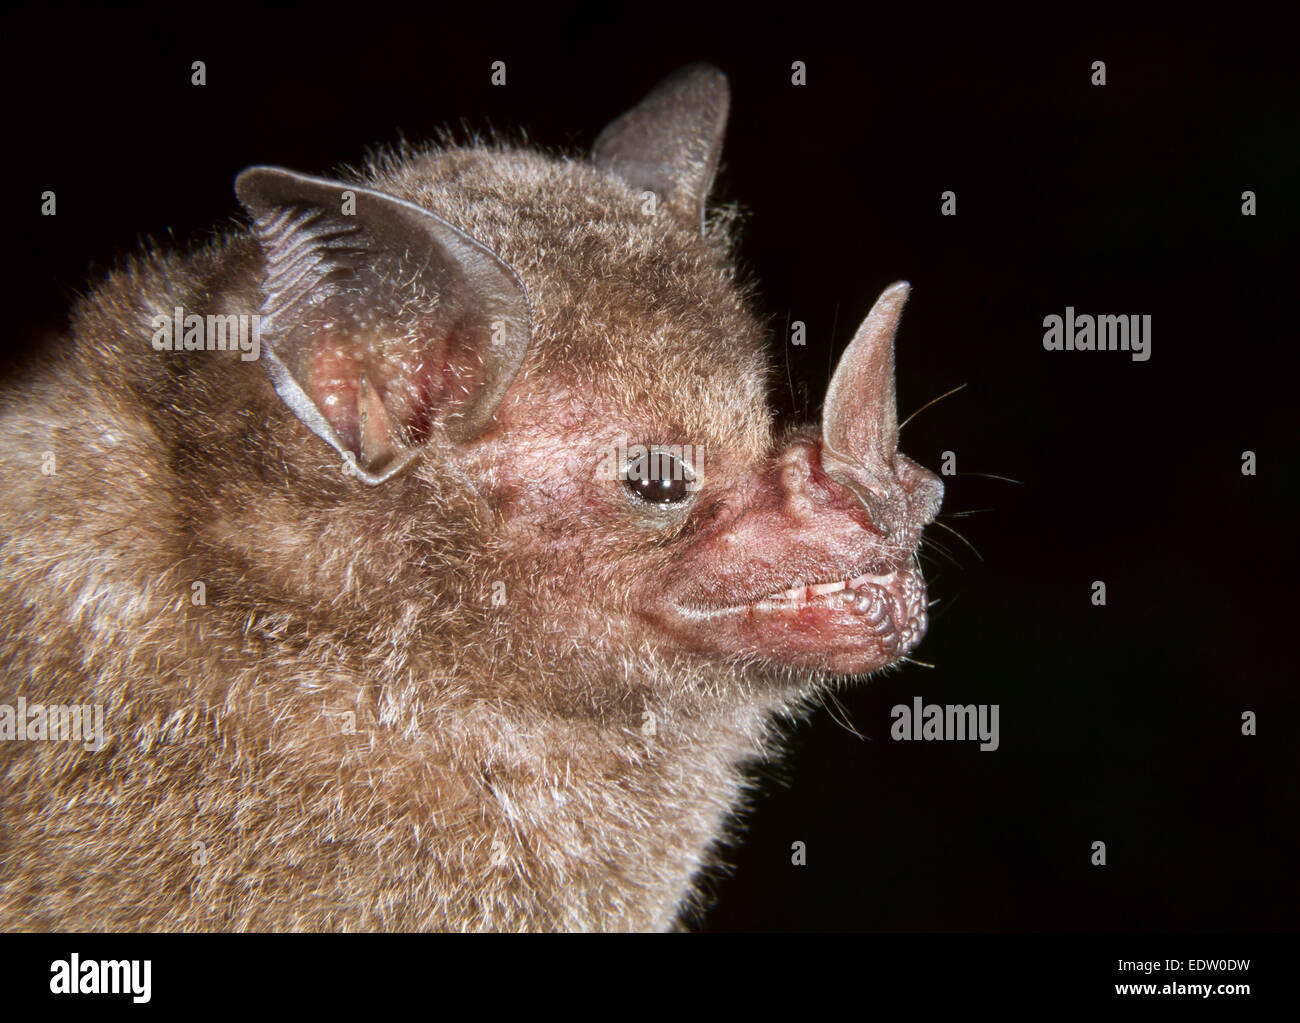 Seba's Short-tailed Obst bat (Carollia perspicillata) Porträt, Limon, Costa Rica. Stockfoto